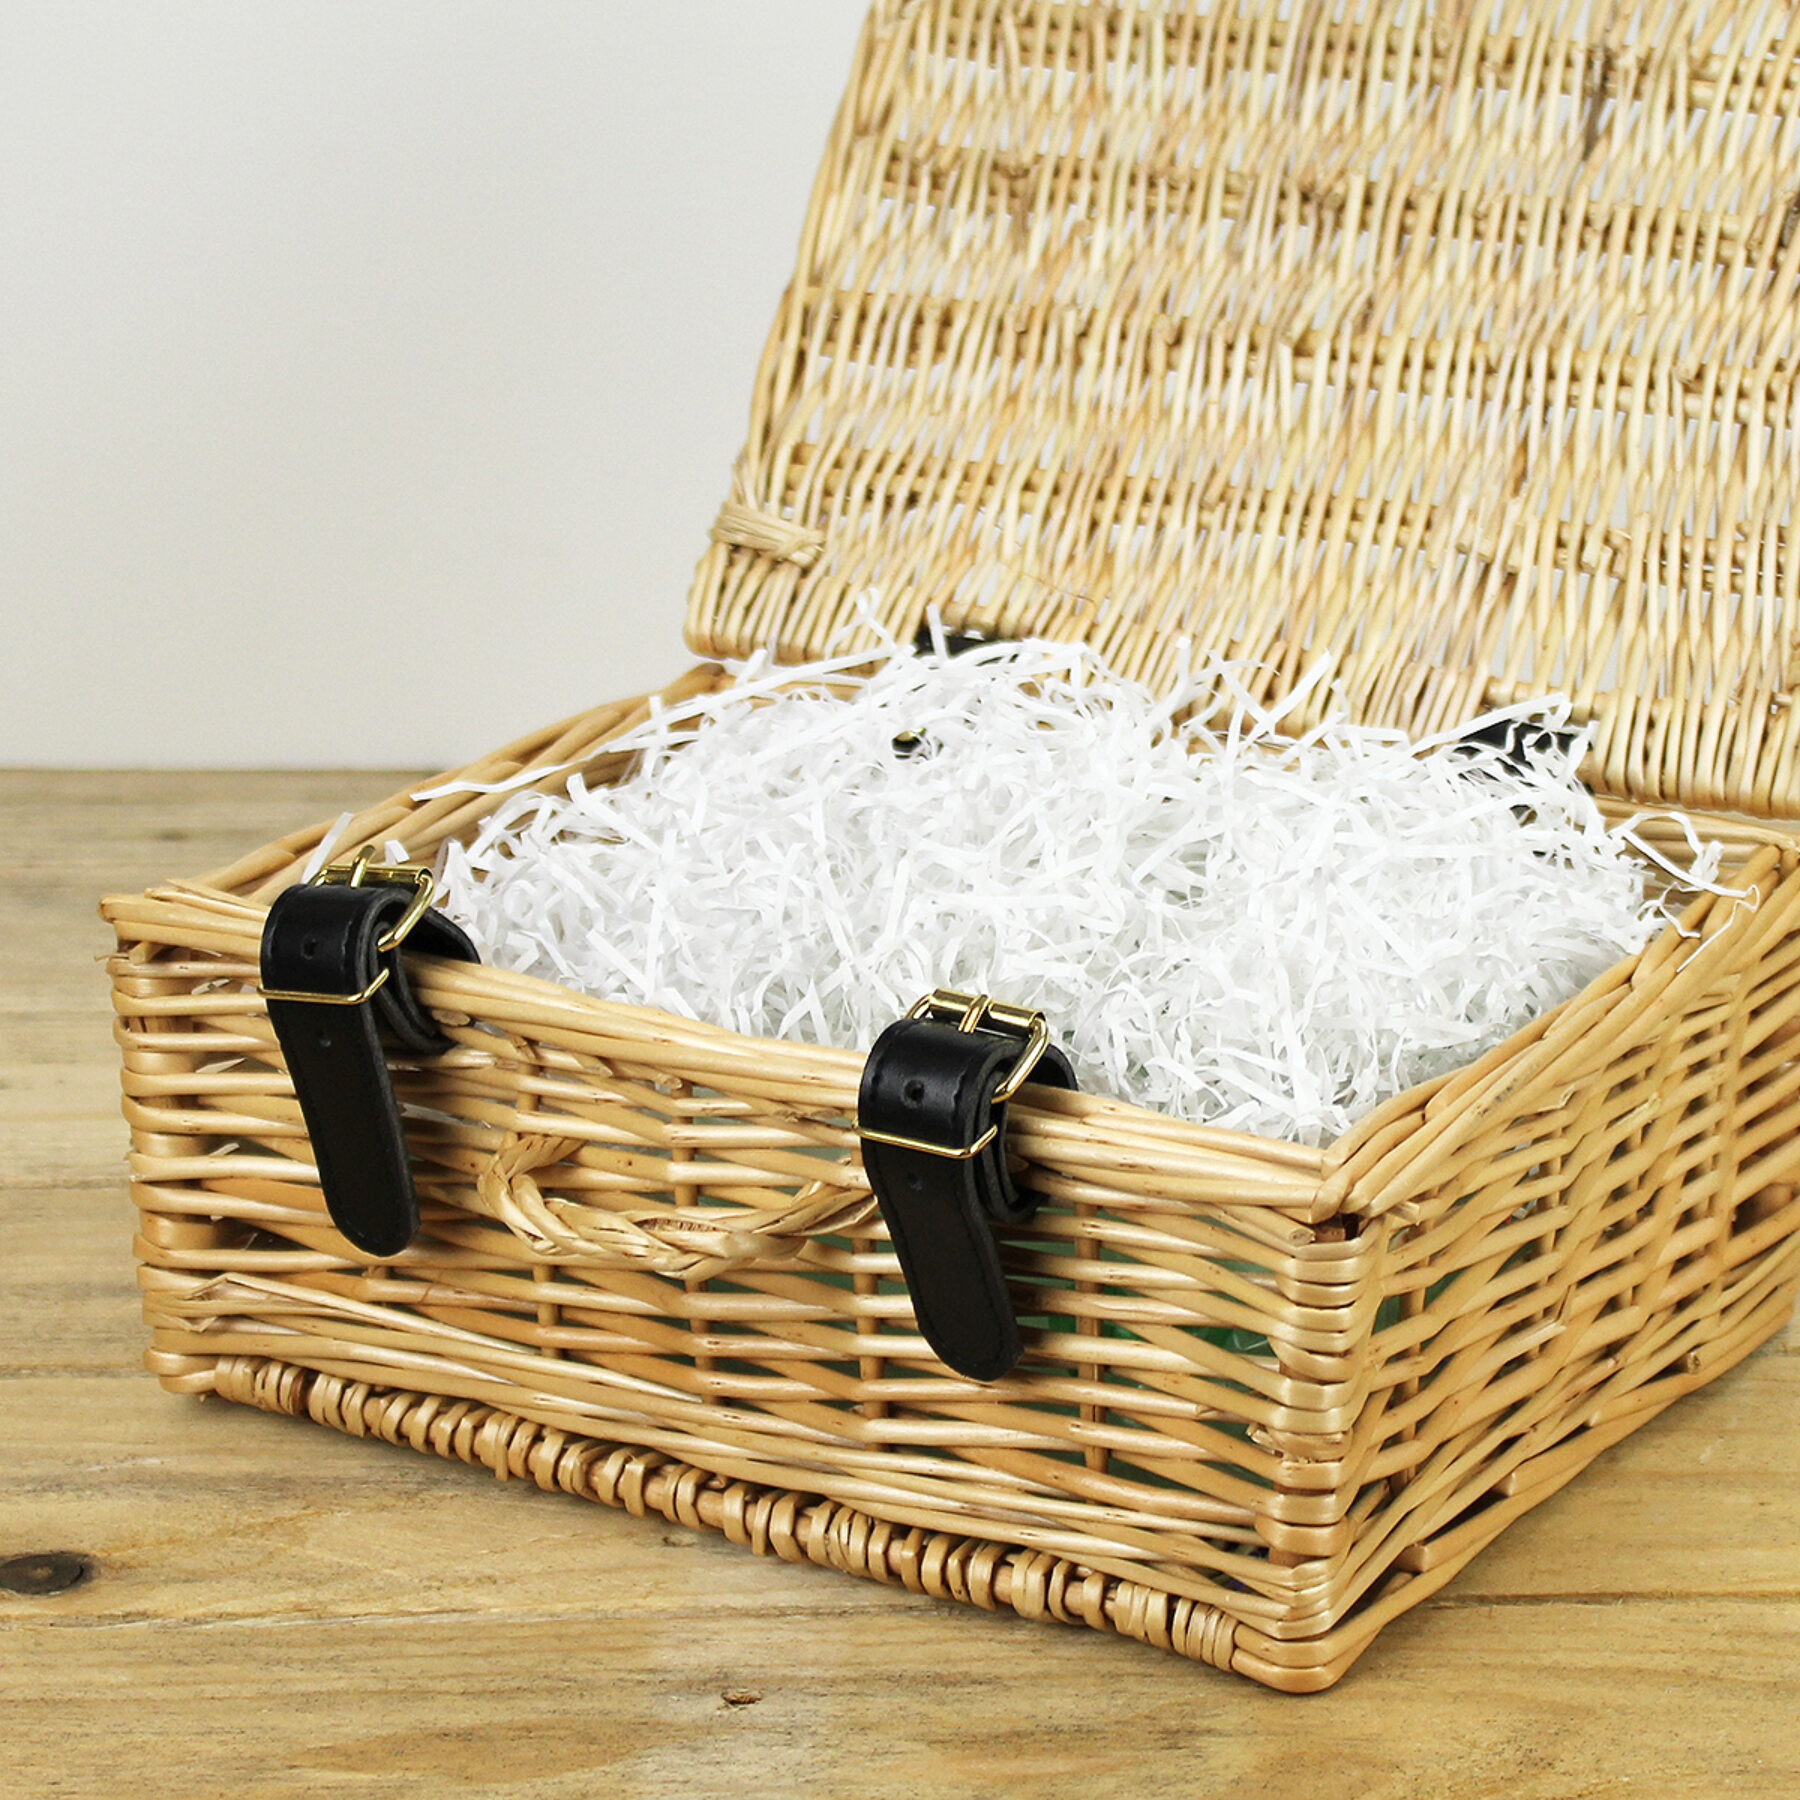 Natural Wicker Hamper Basket - Open with white shredded paper